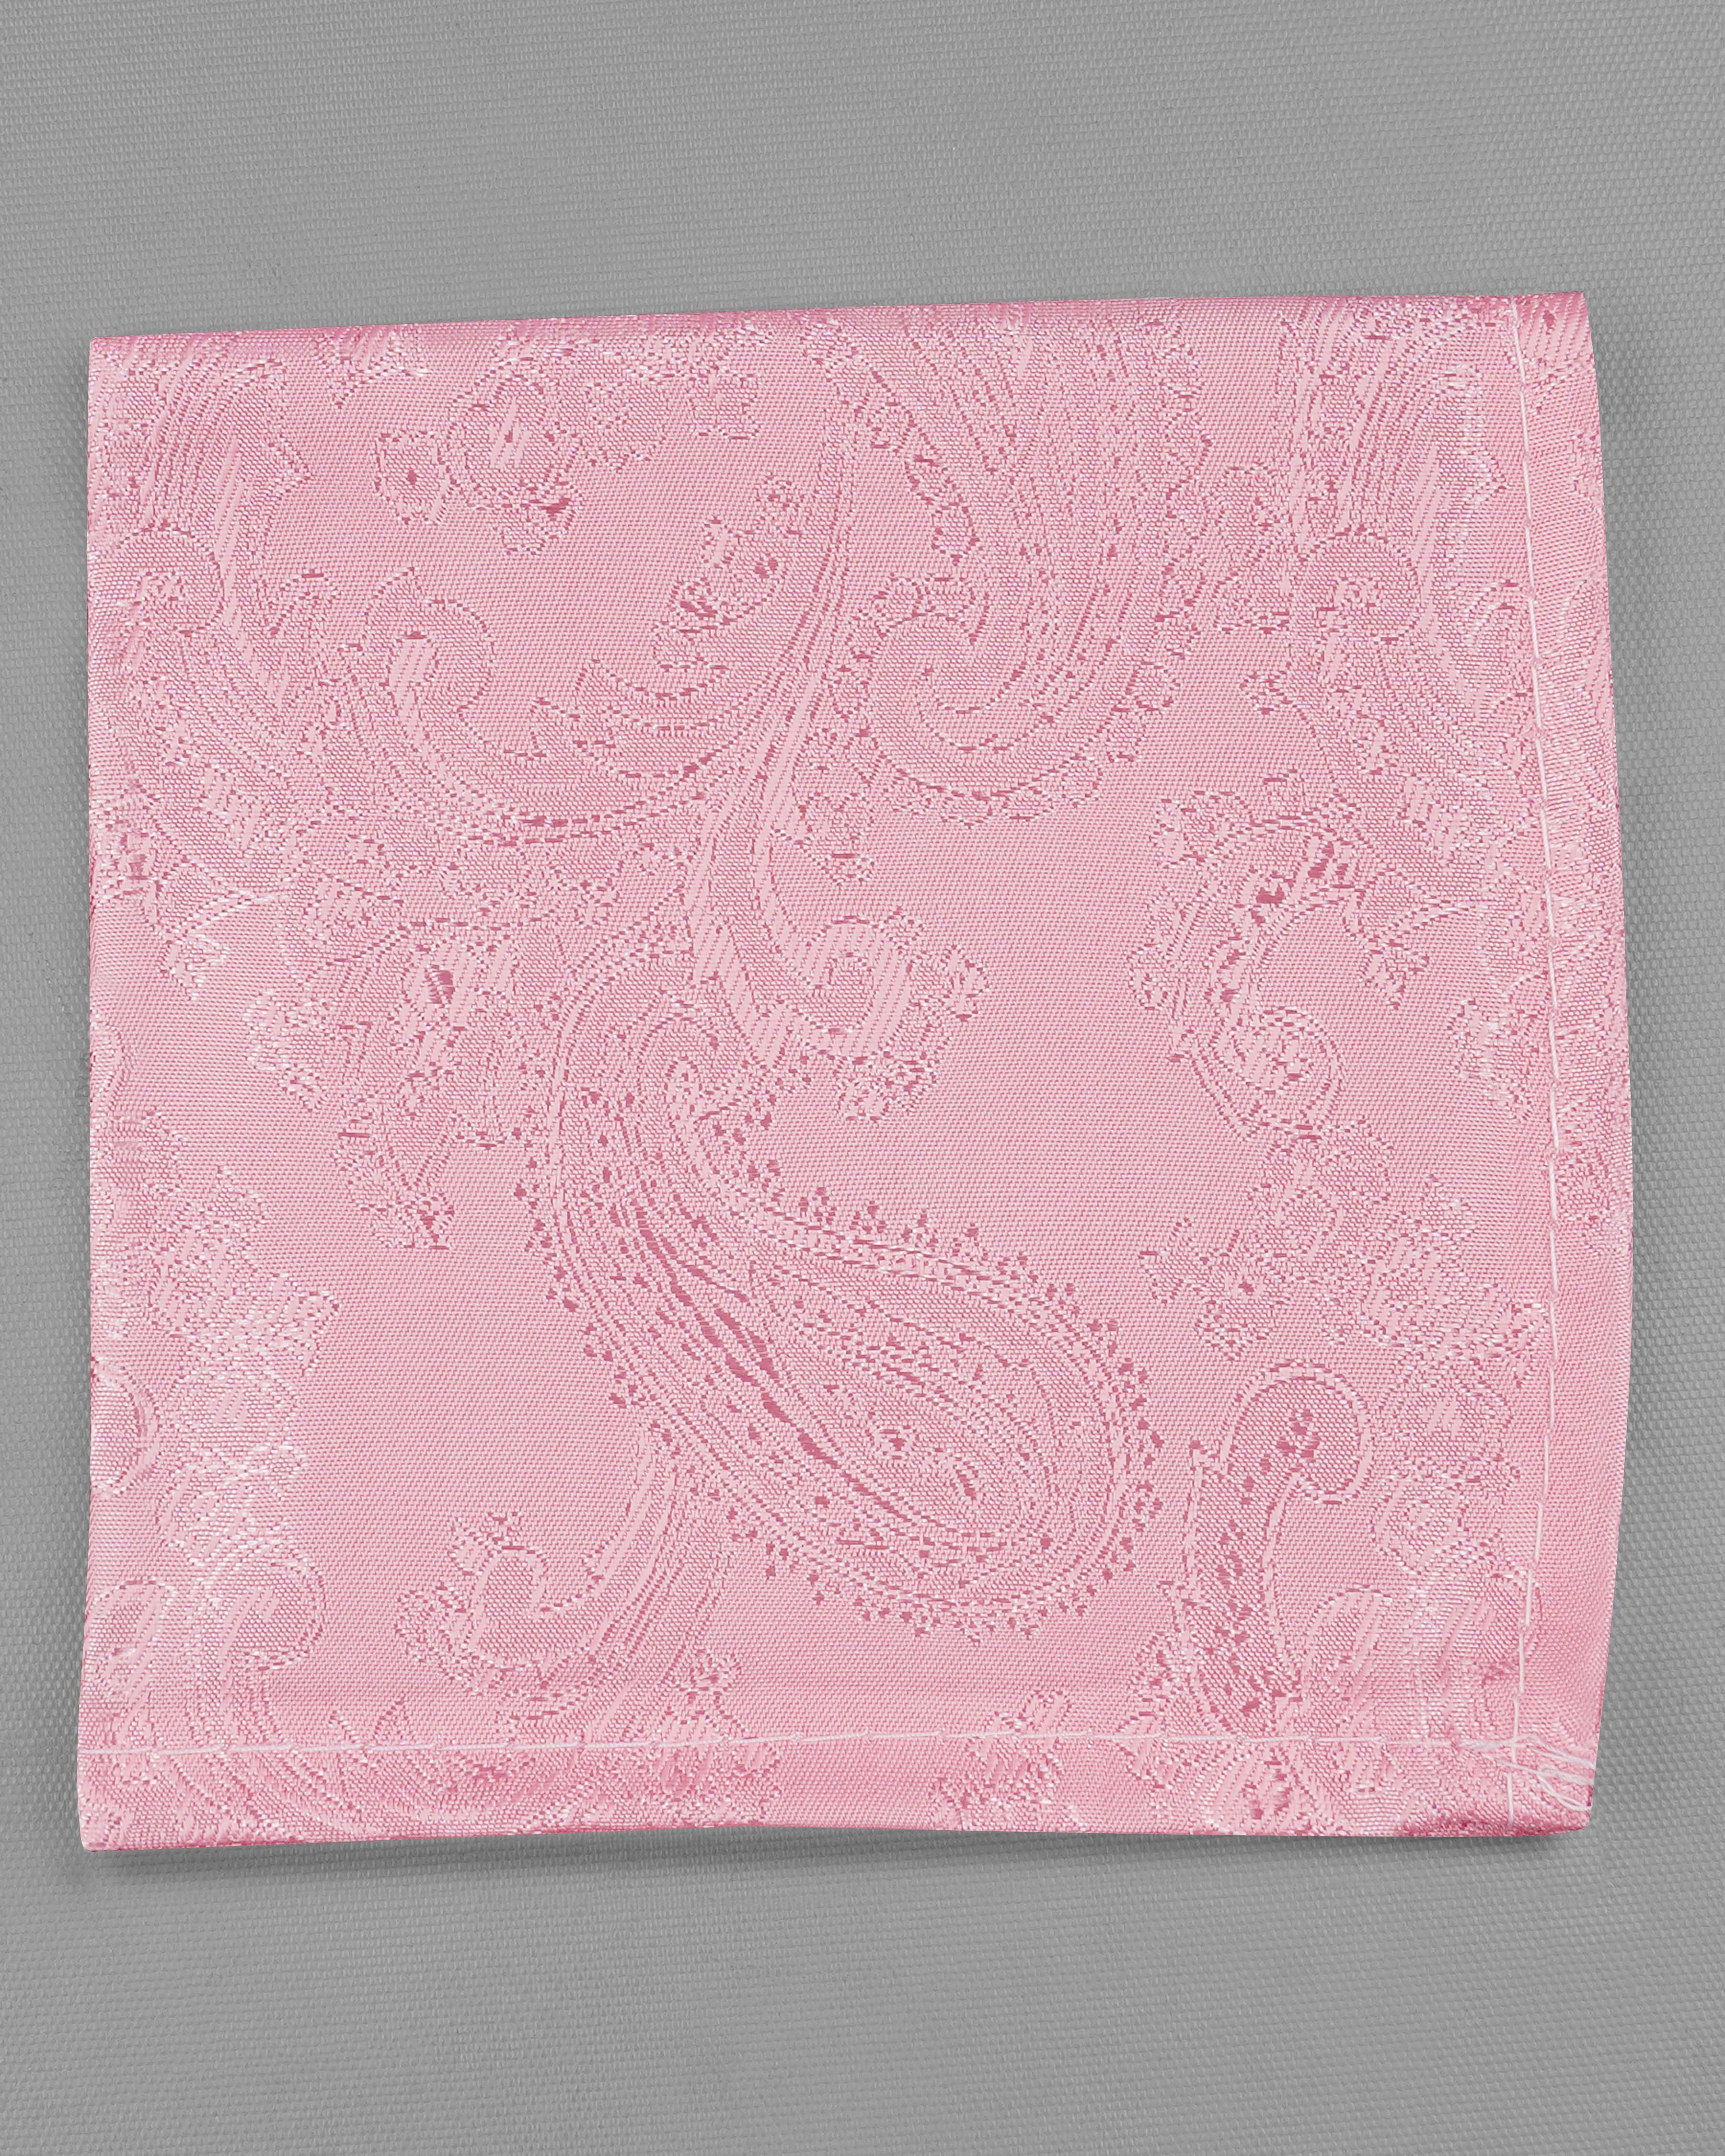 Careys Pink Paisley Jacquard Tie with Pocket Square TP038